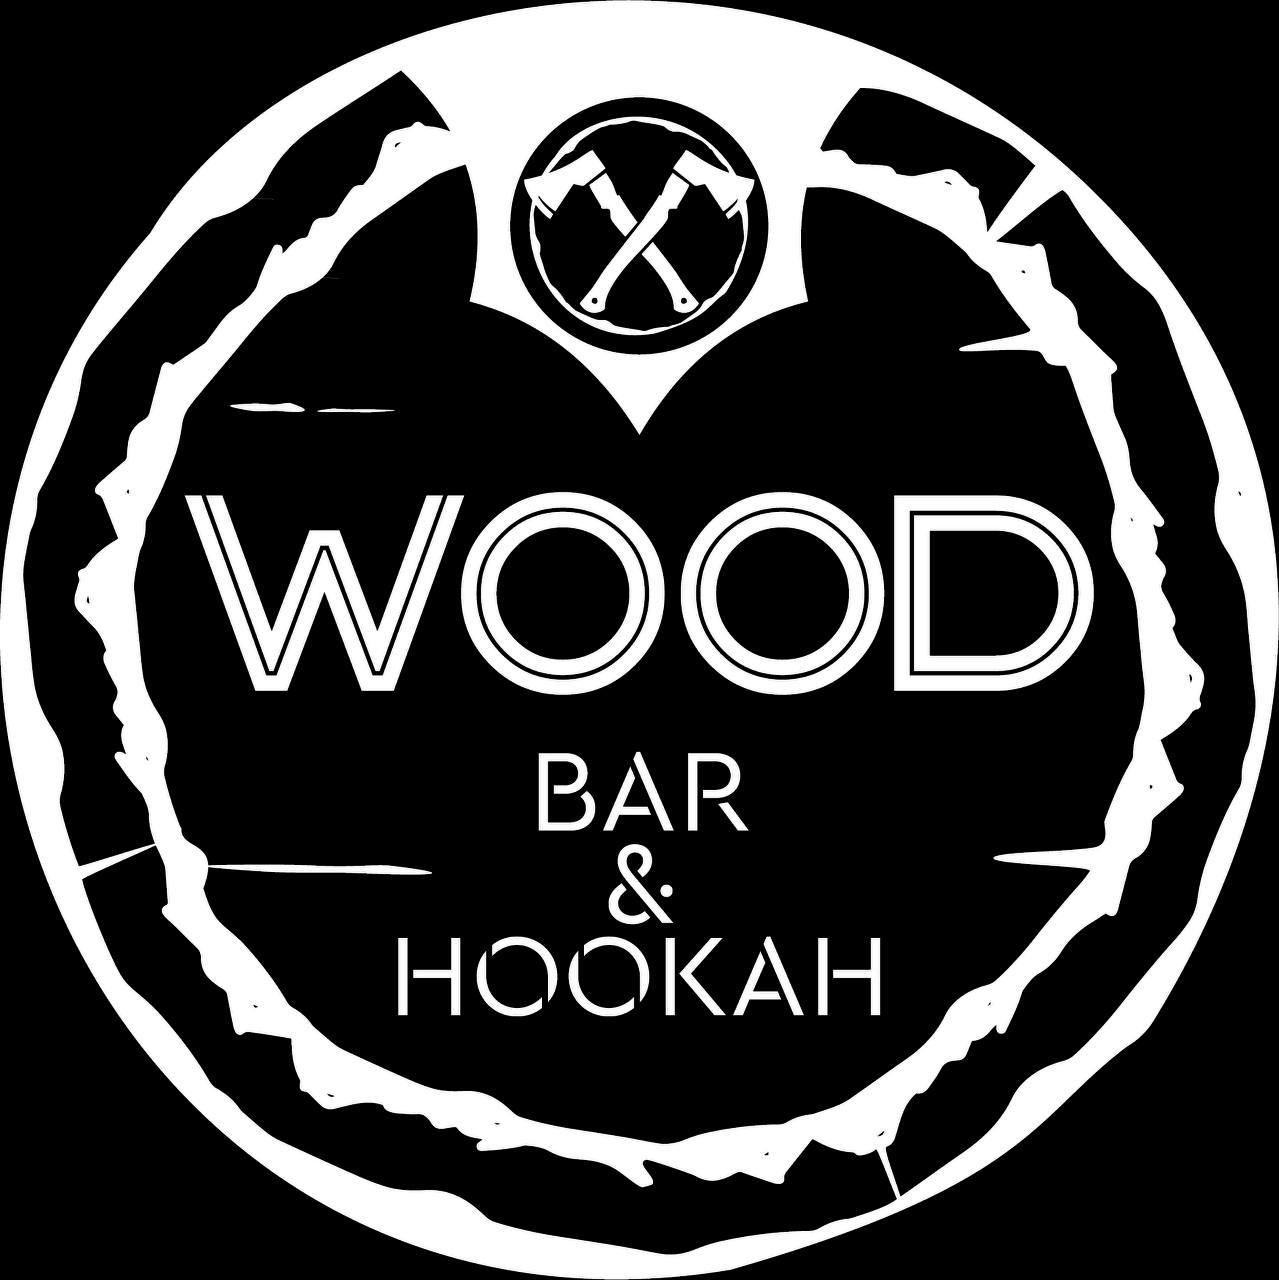 Wood bar & hookah